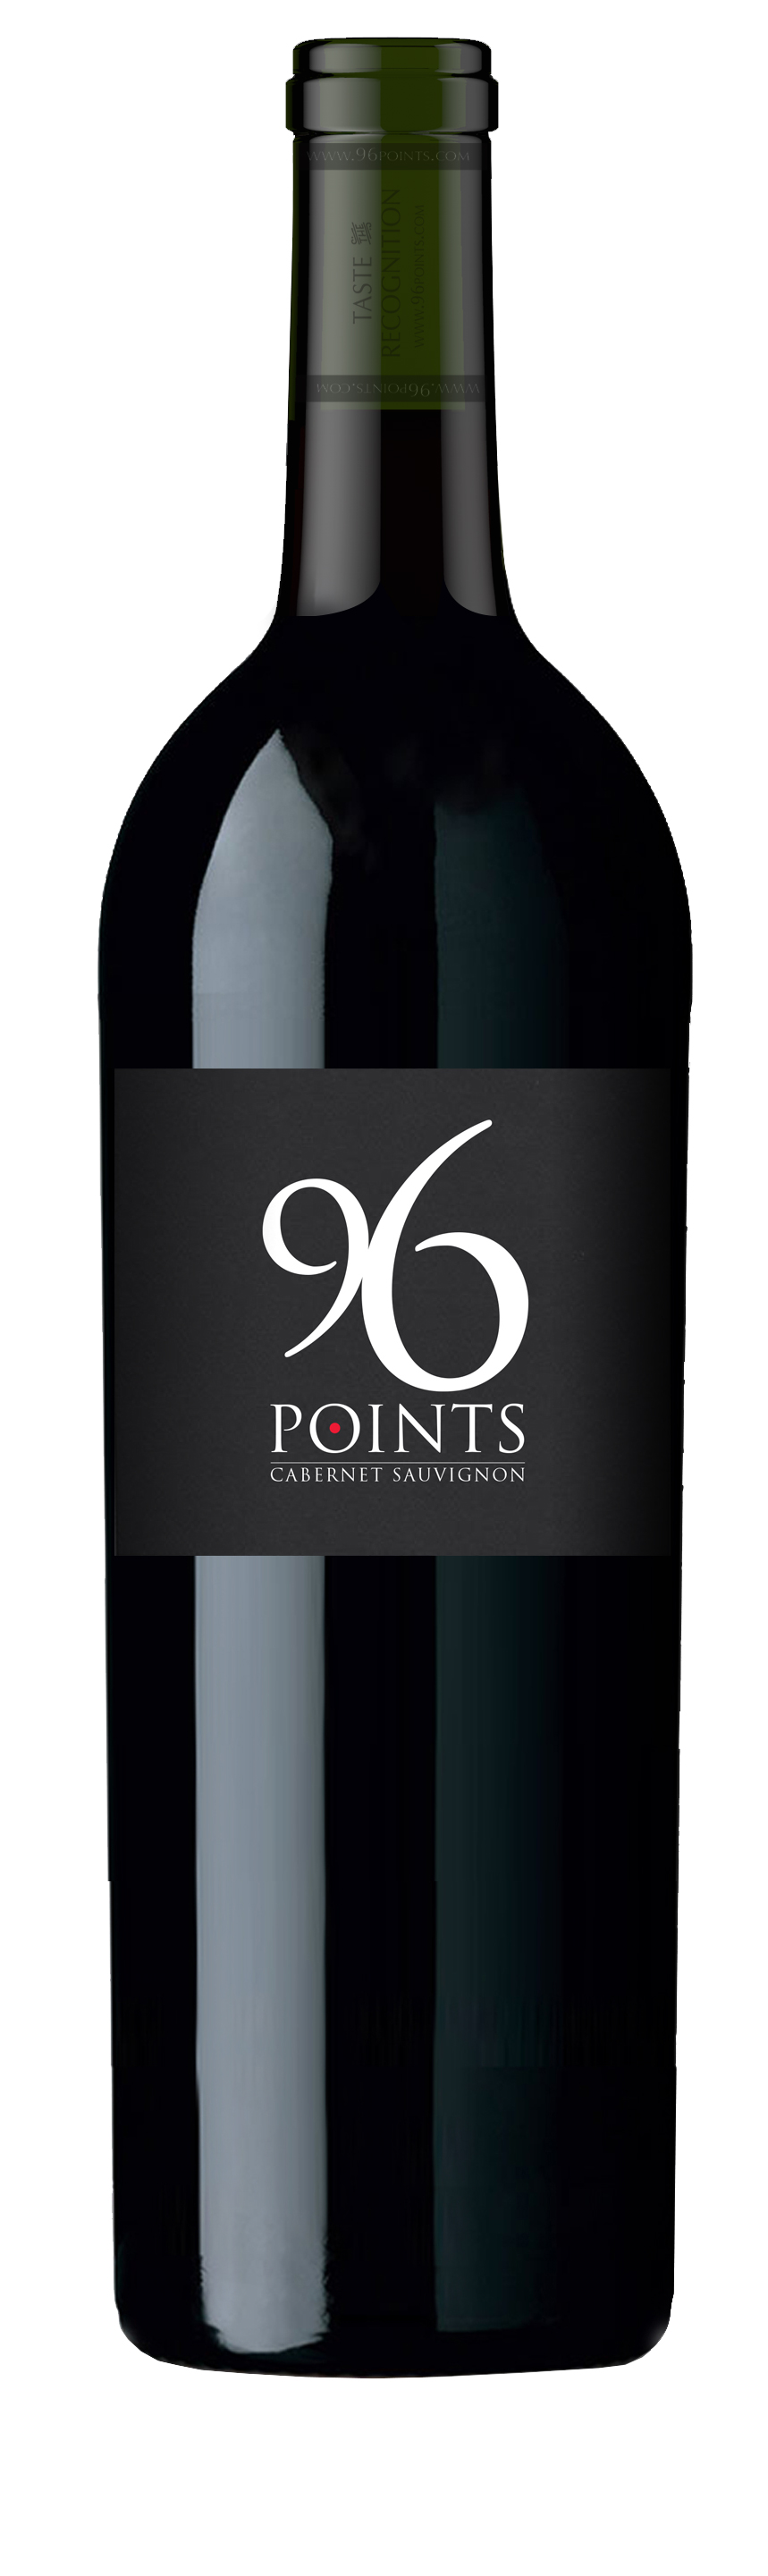 trade-media-96-points-cabernet-sauvignon